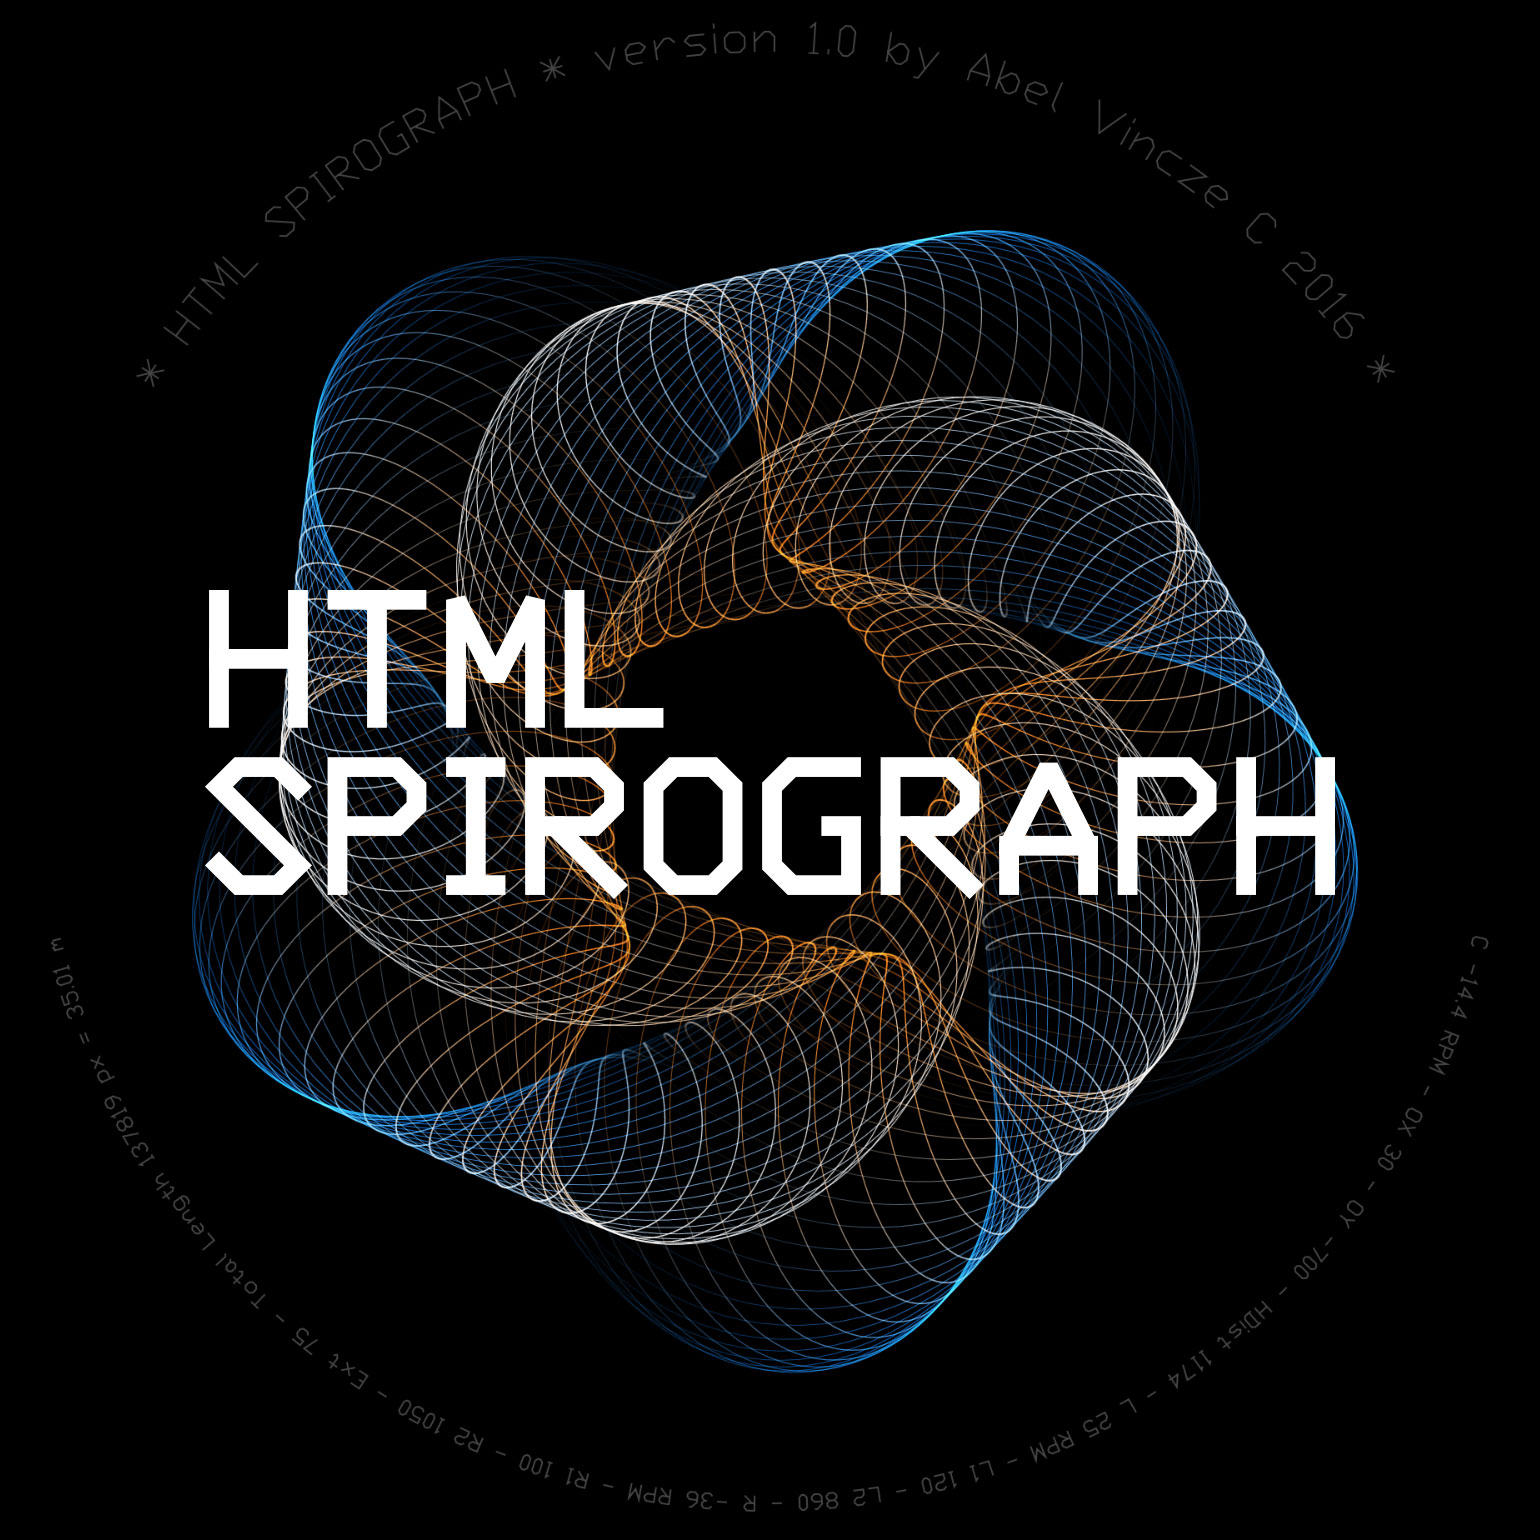 htmlspirograph.com